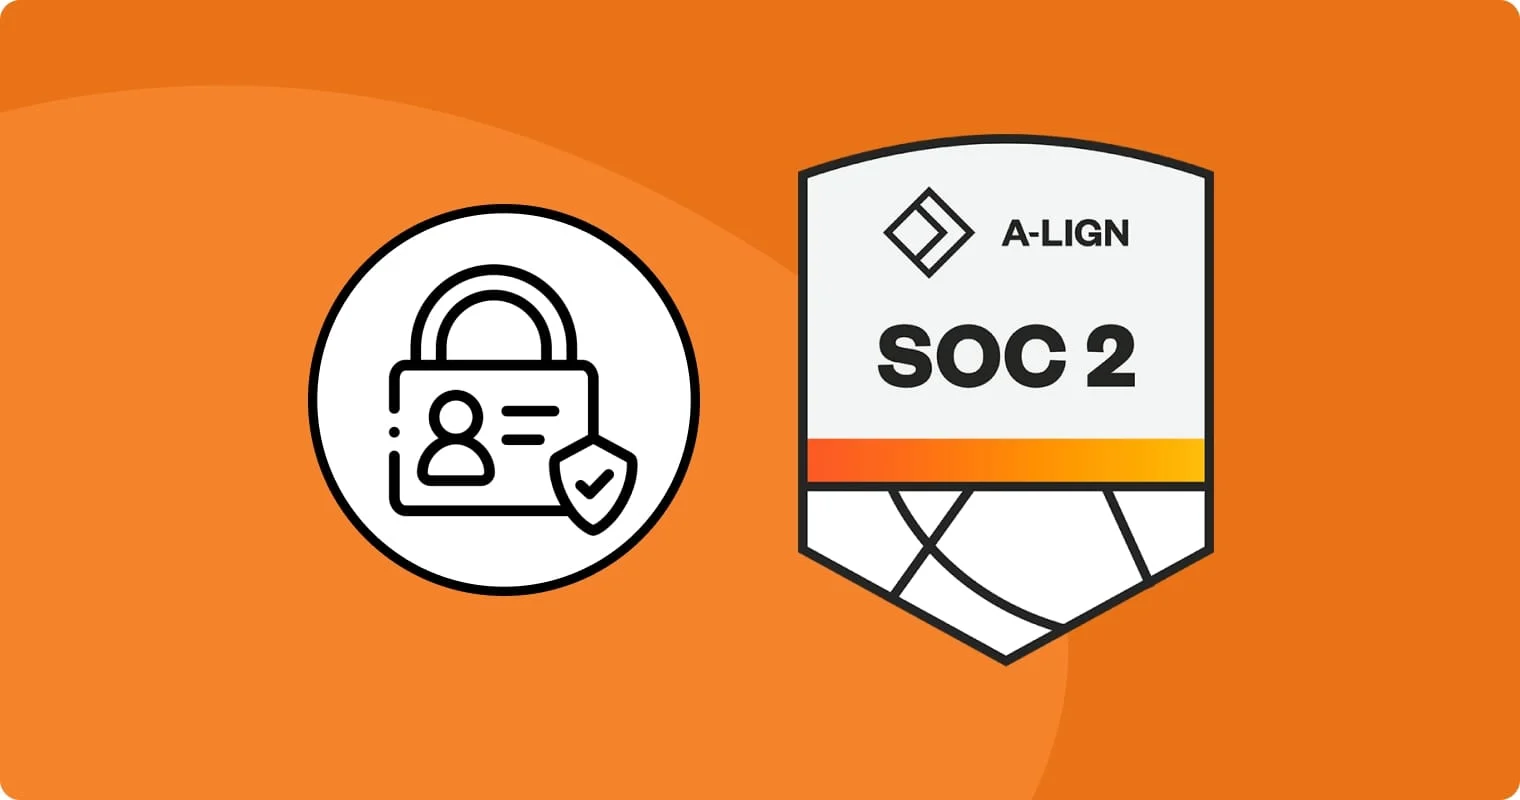 Soc 2 Examination Logo by A-Lign